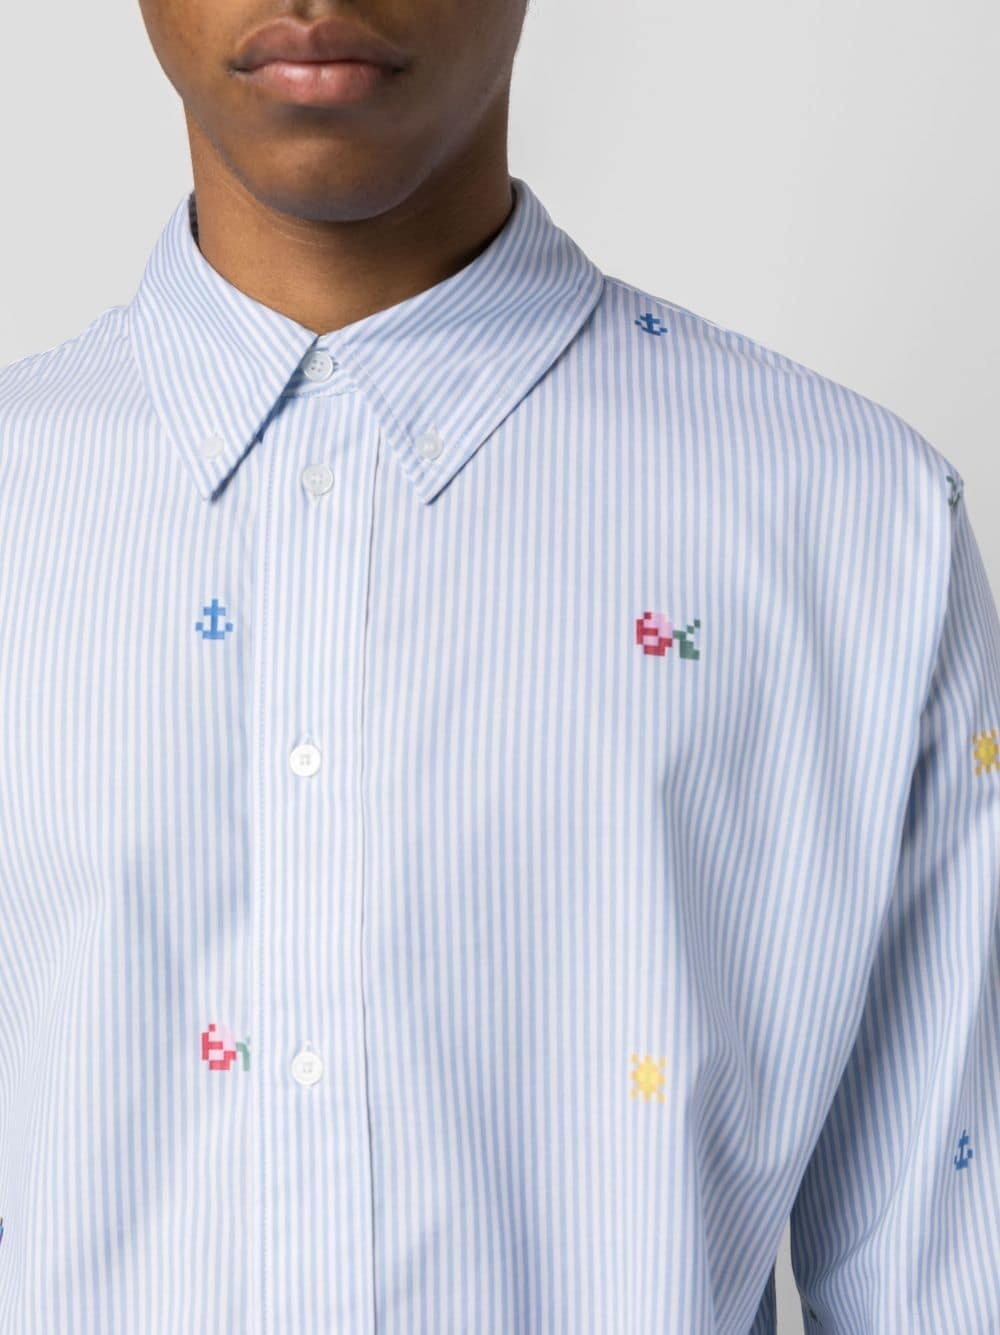 Kenzo Pixel striped shirt - 5